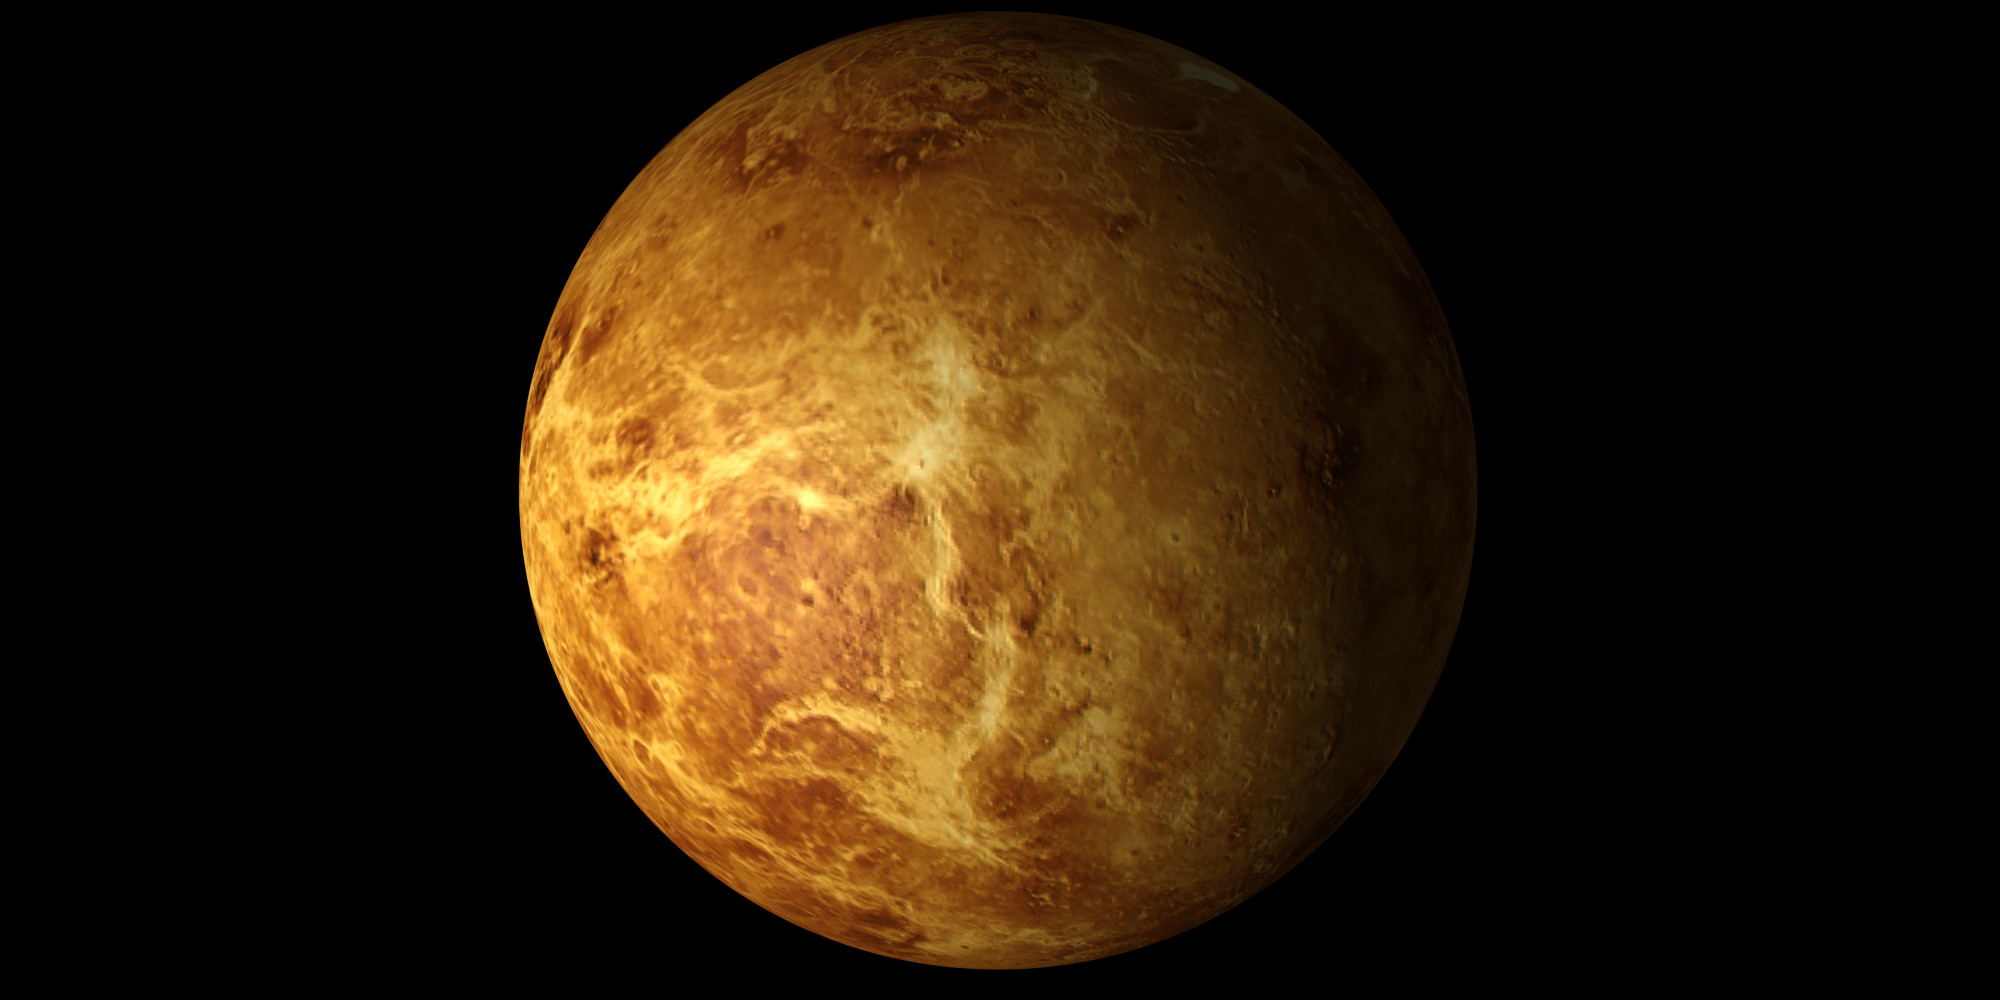 Scientists Are Thinking Of Ways To Terraform Venus